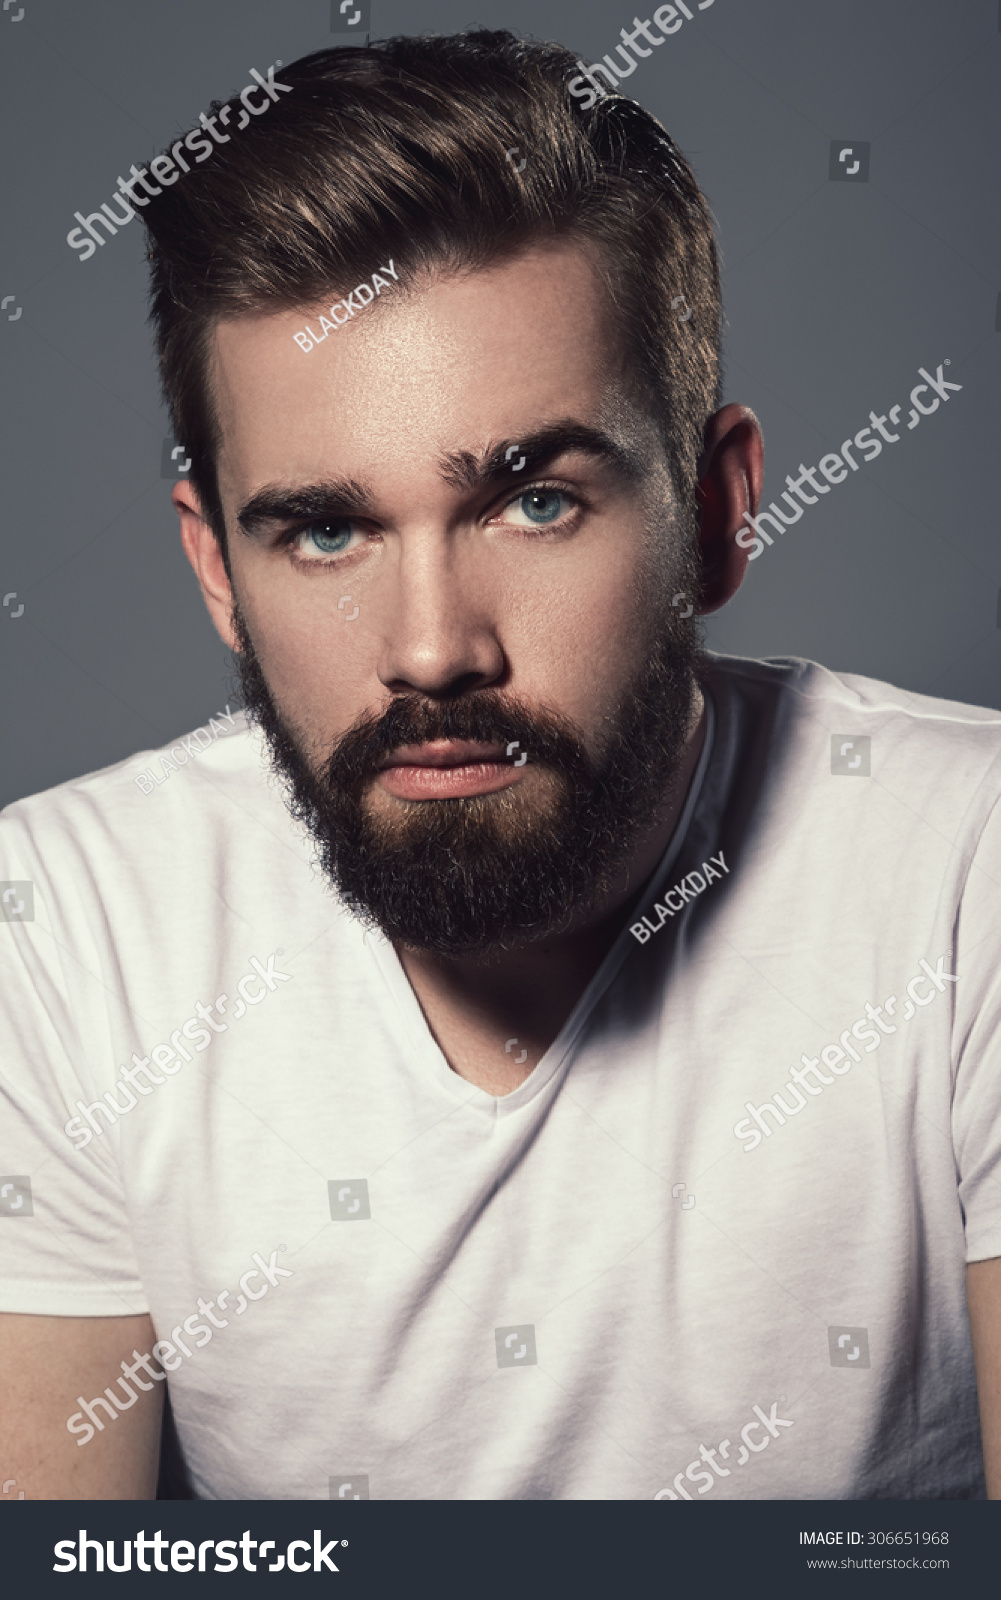 Portrait Handsome Man Beard Stock Photo 306651968 - Shutterstock